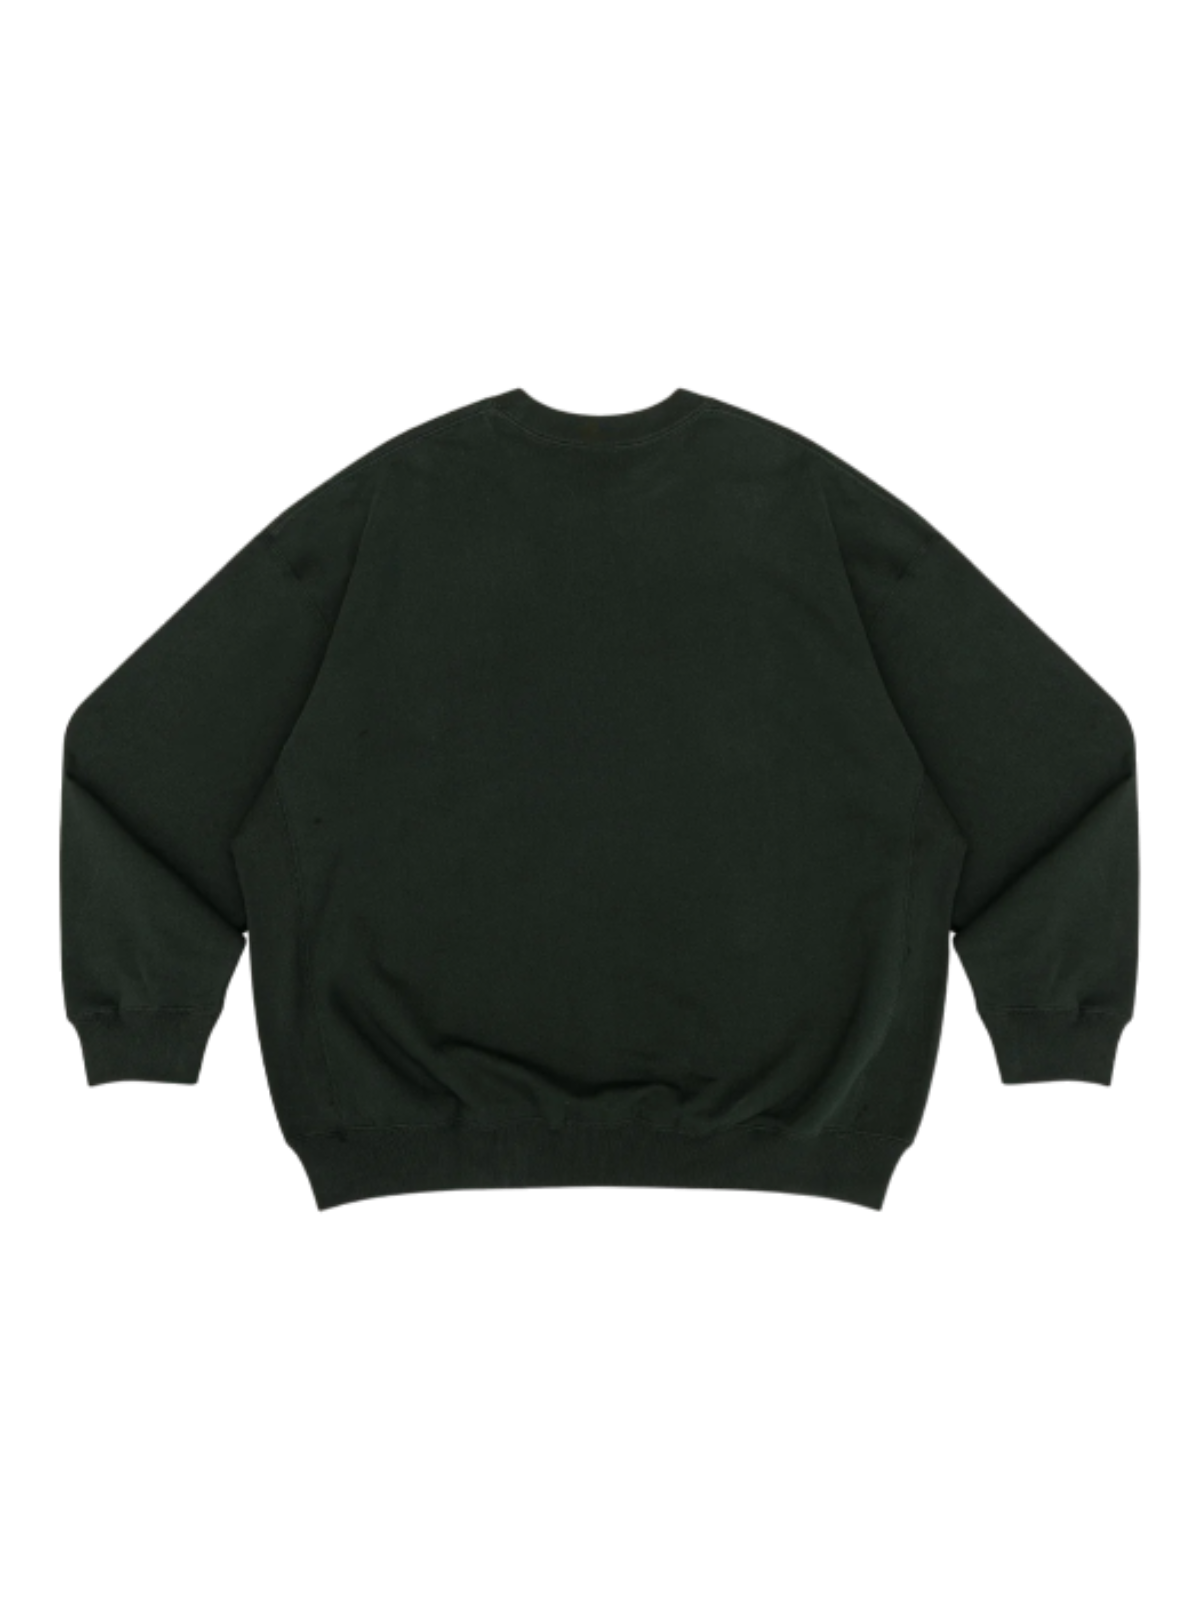 Aim Higher Club Light Sweater In Dark Green